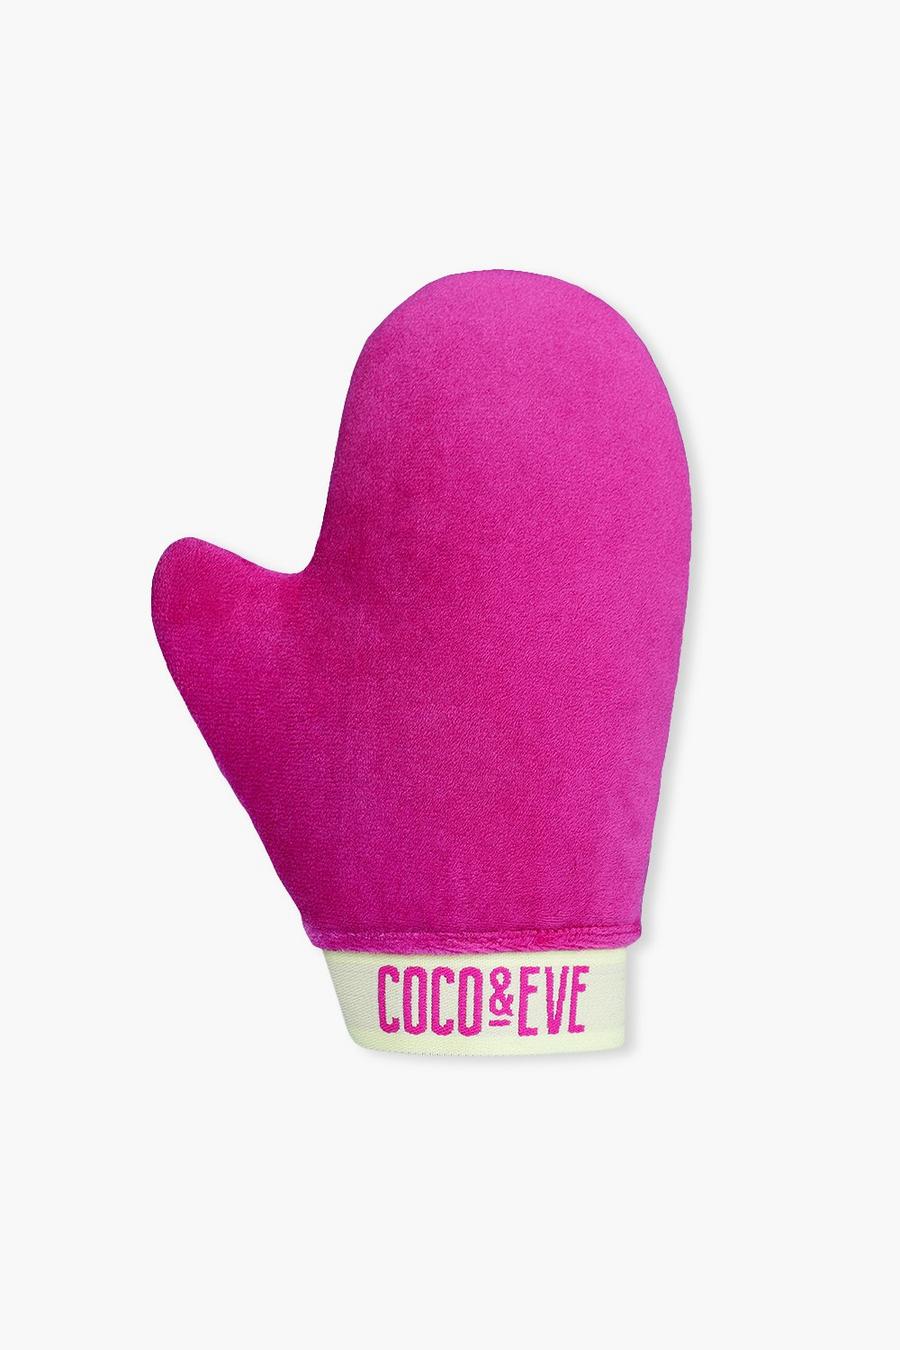 Coco & Eve - Gant applicateur d'autobronzant Sunny Honey, Pink rose image number 1